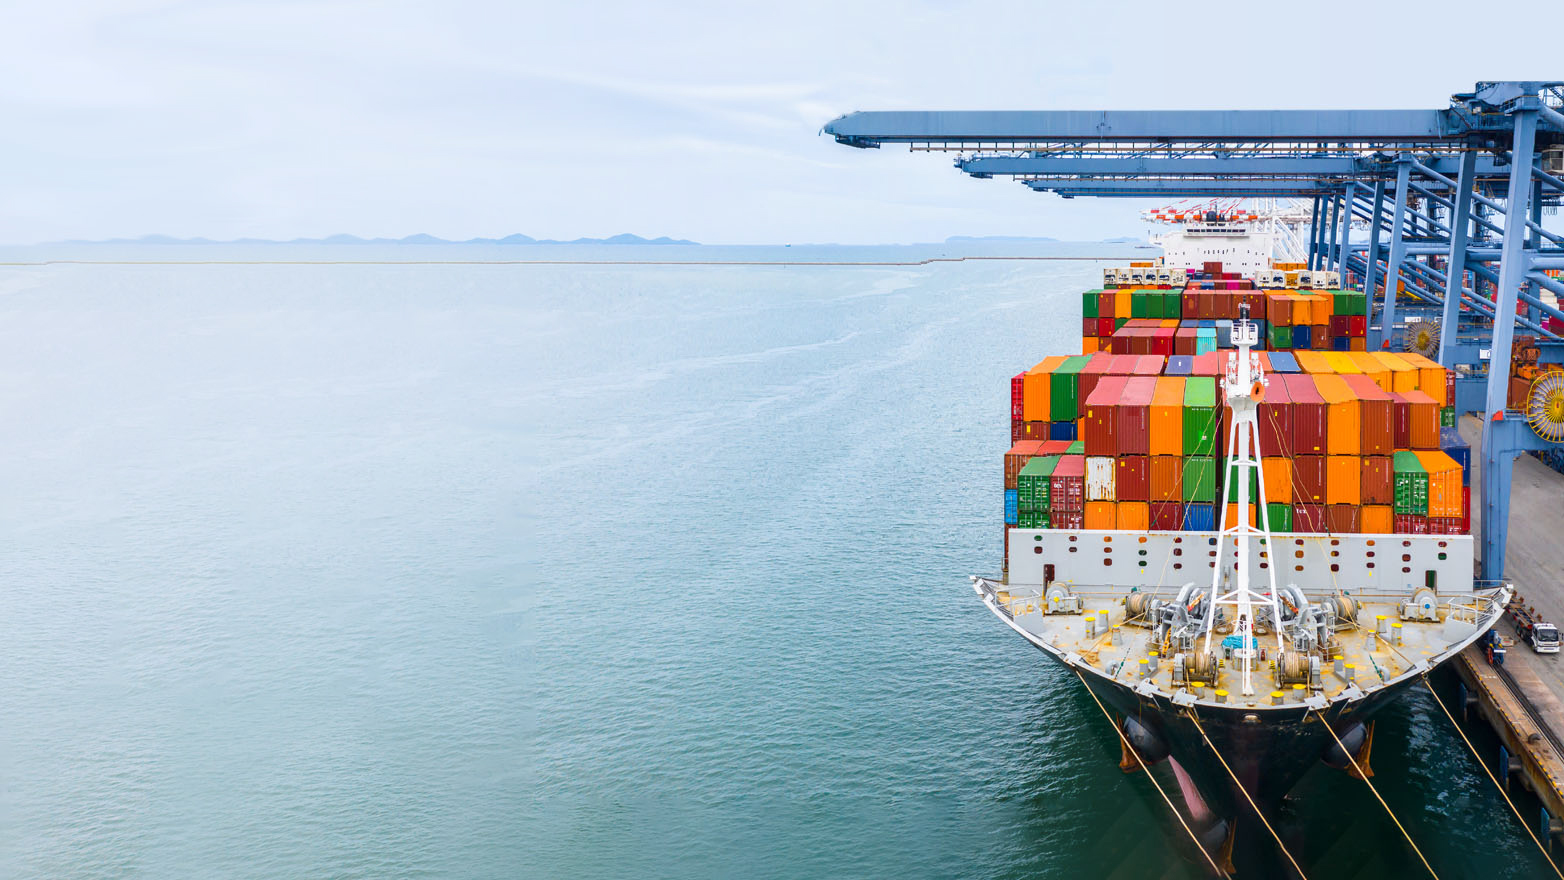 LV Shipping & Transport becomes LV Logistics - NOF